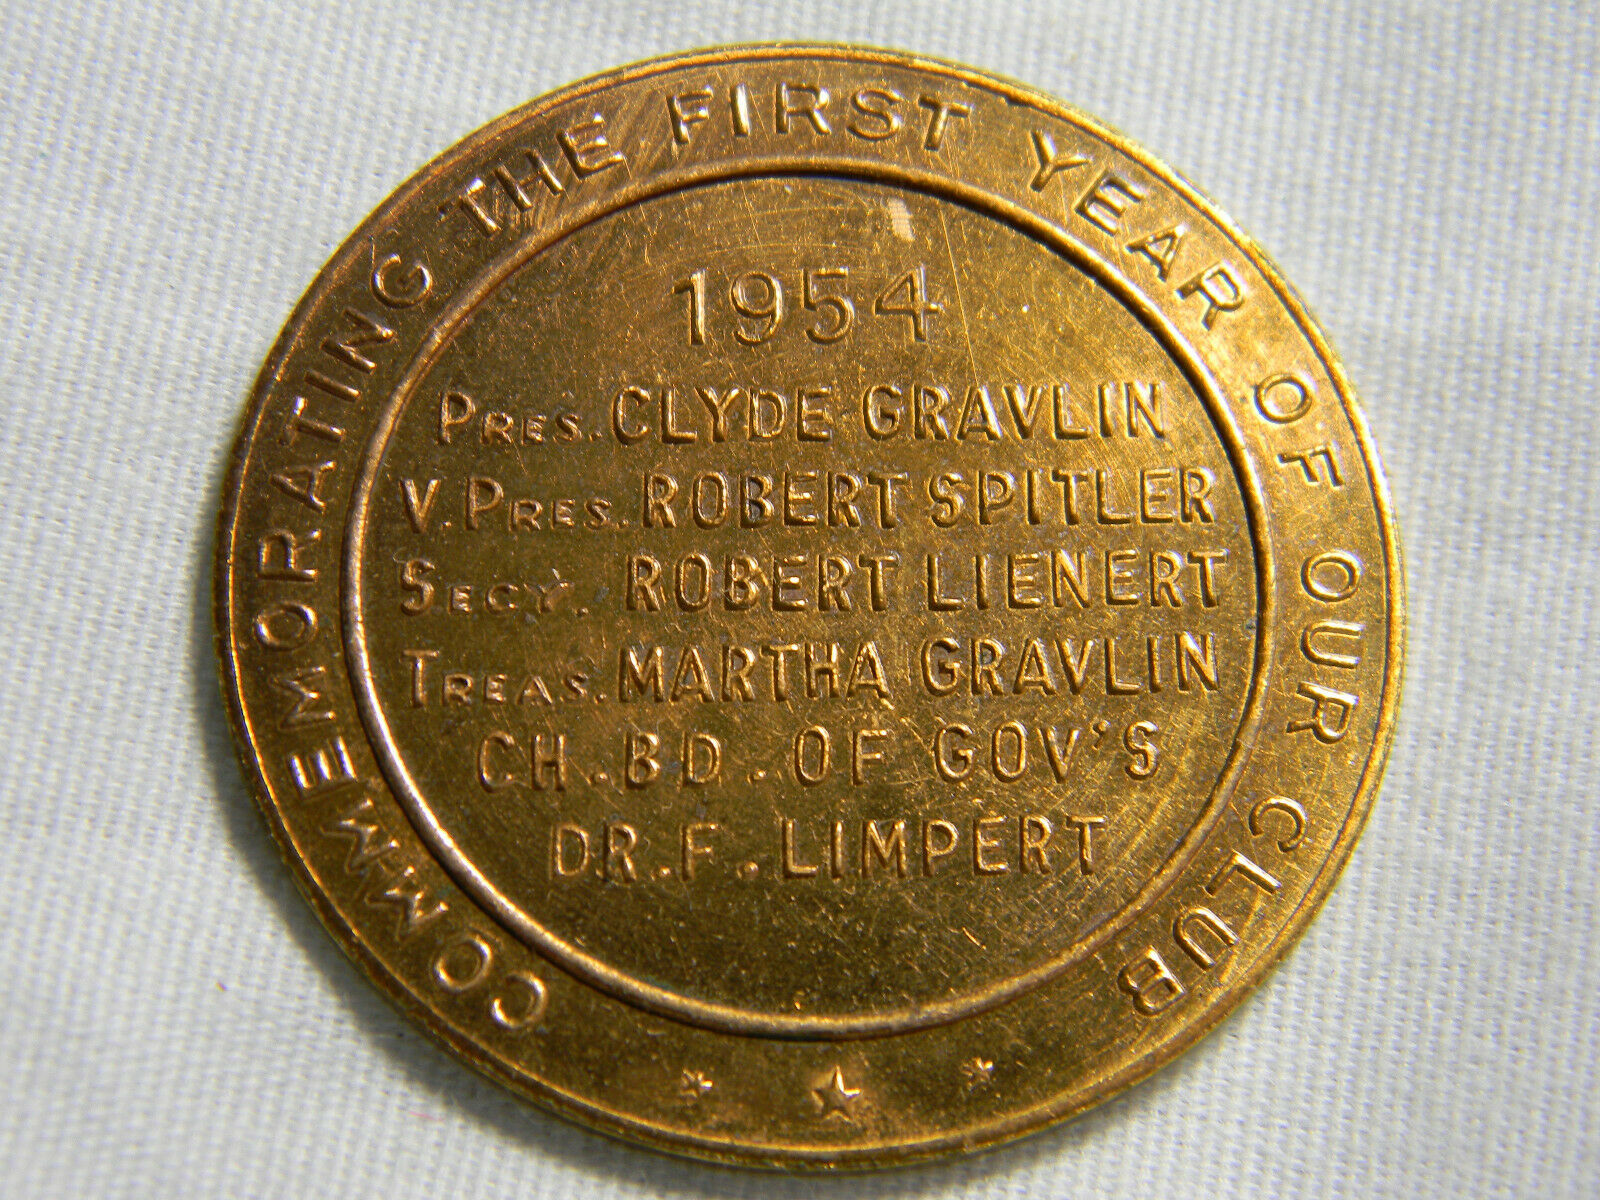 Usa 1954 Royal Oak Coin Club Medal (116)